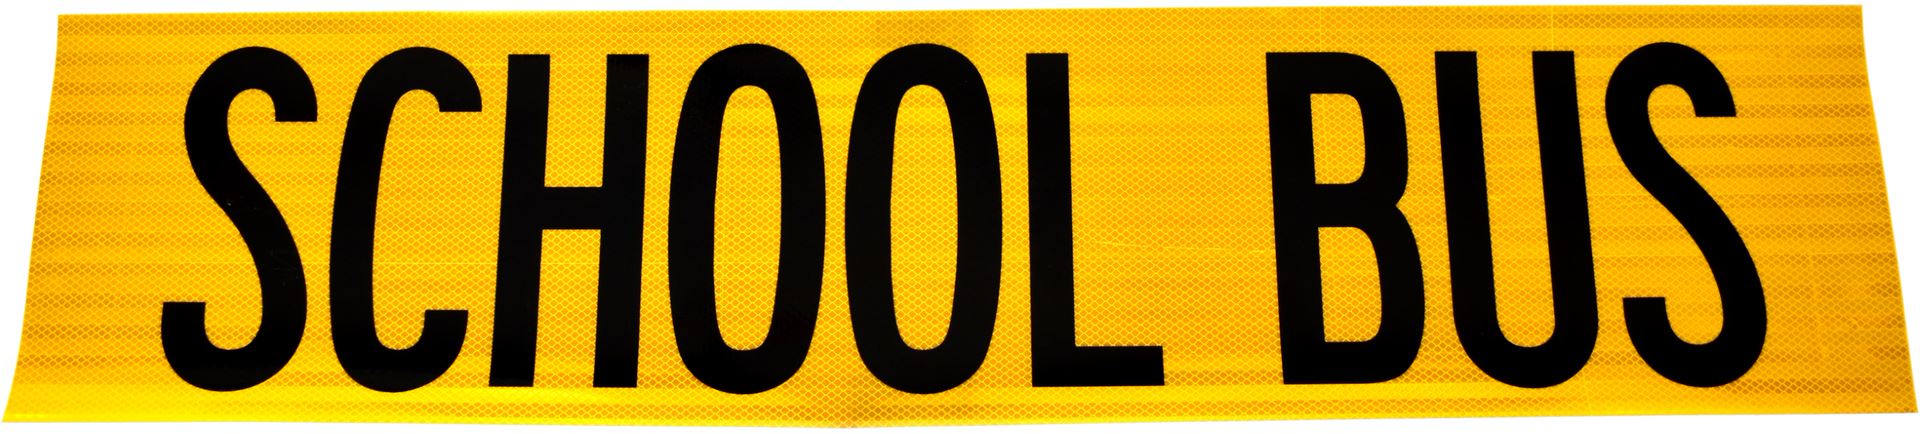 3M 31119 Diamond Grade Yellow Reflective School Bus Sign 983-71, 8-3/4" x 36"